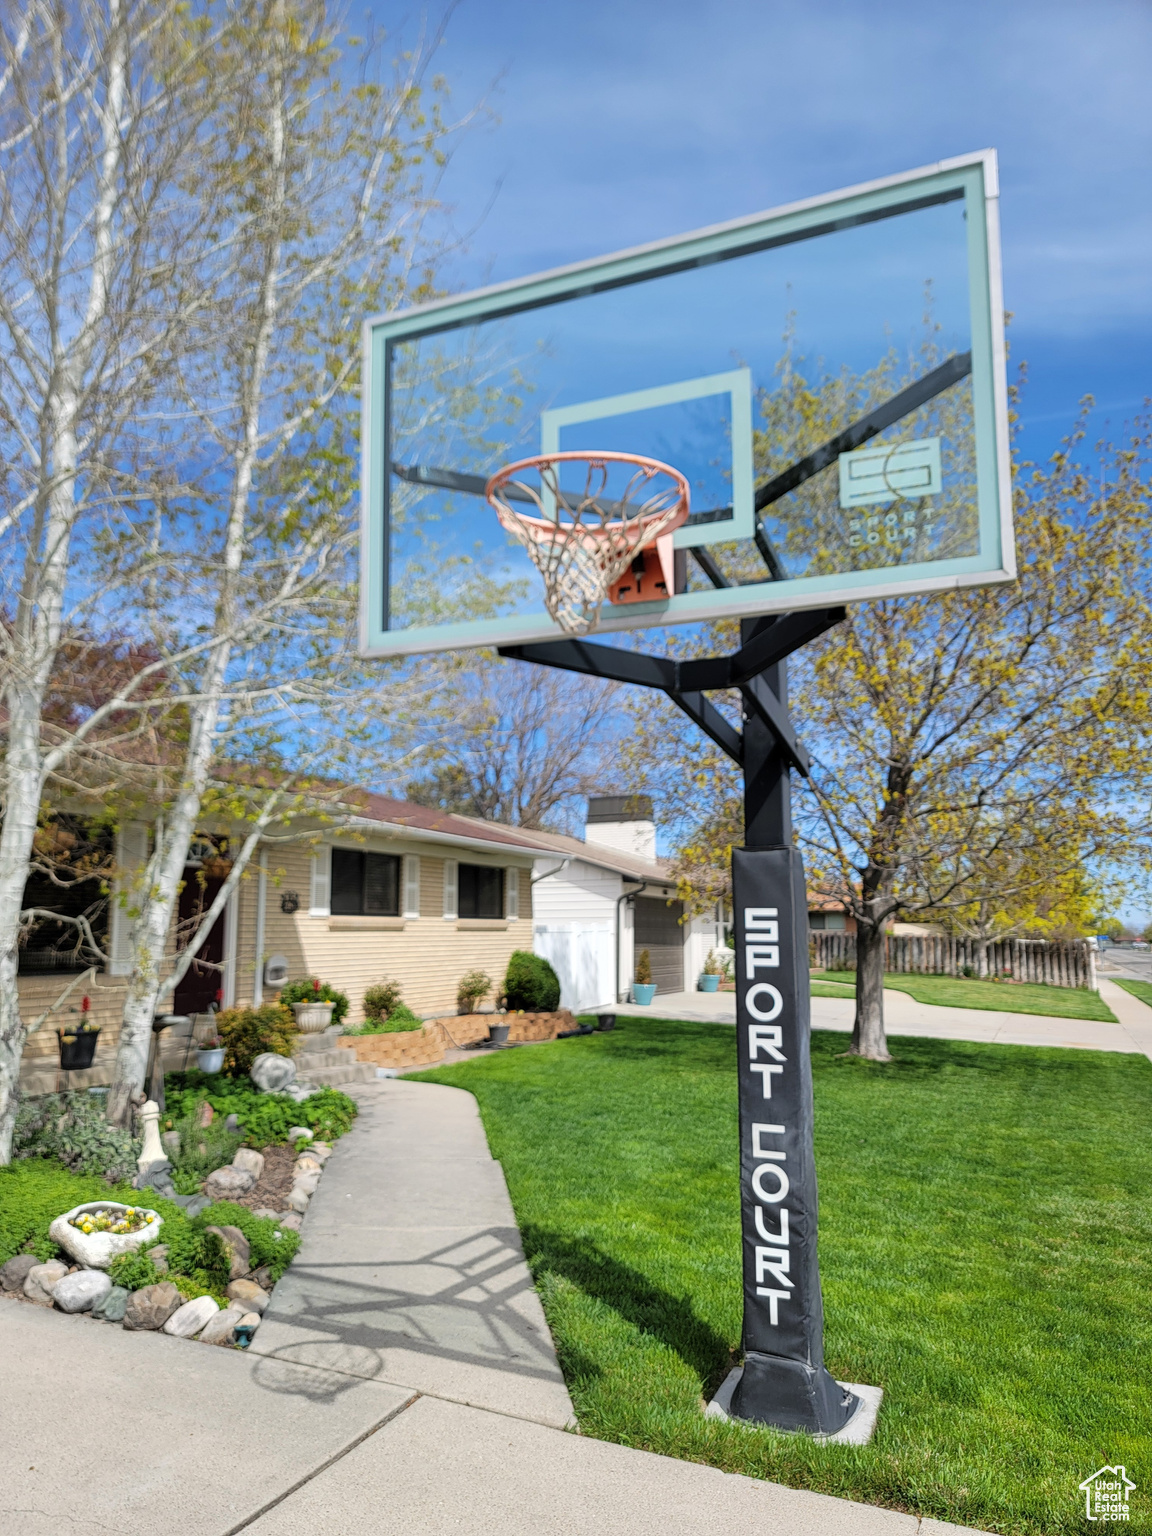 Front yard, basketball hoop